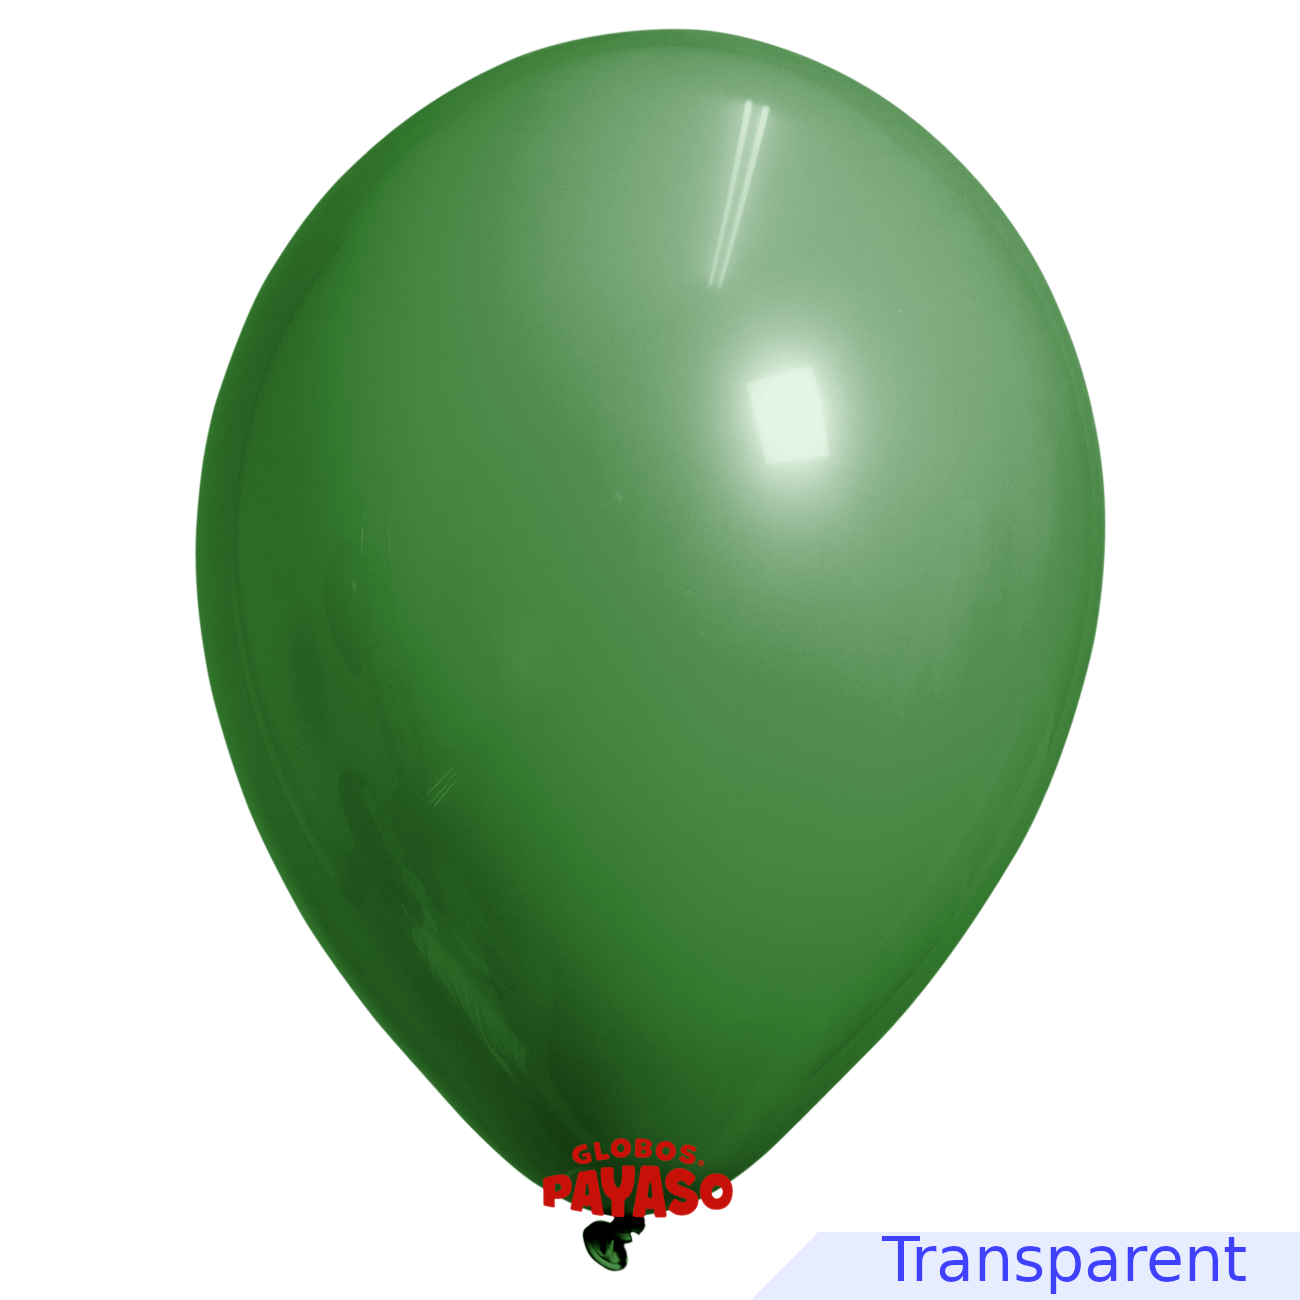 Globos Payaso / Unique 36" Emerald Green Translucid Decorator Balloon